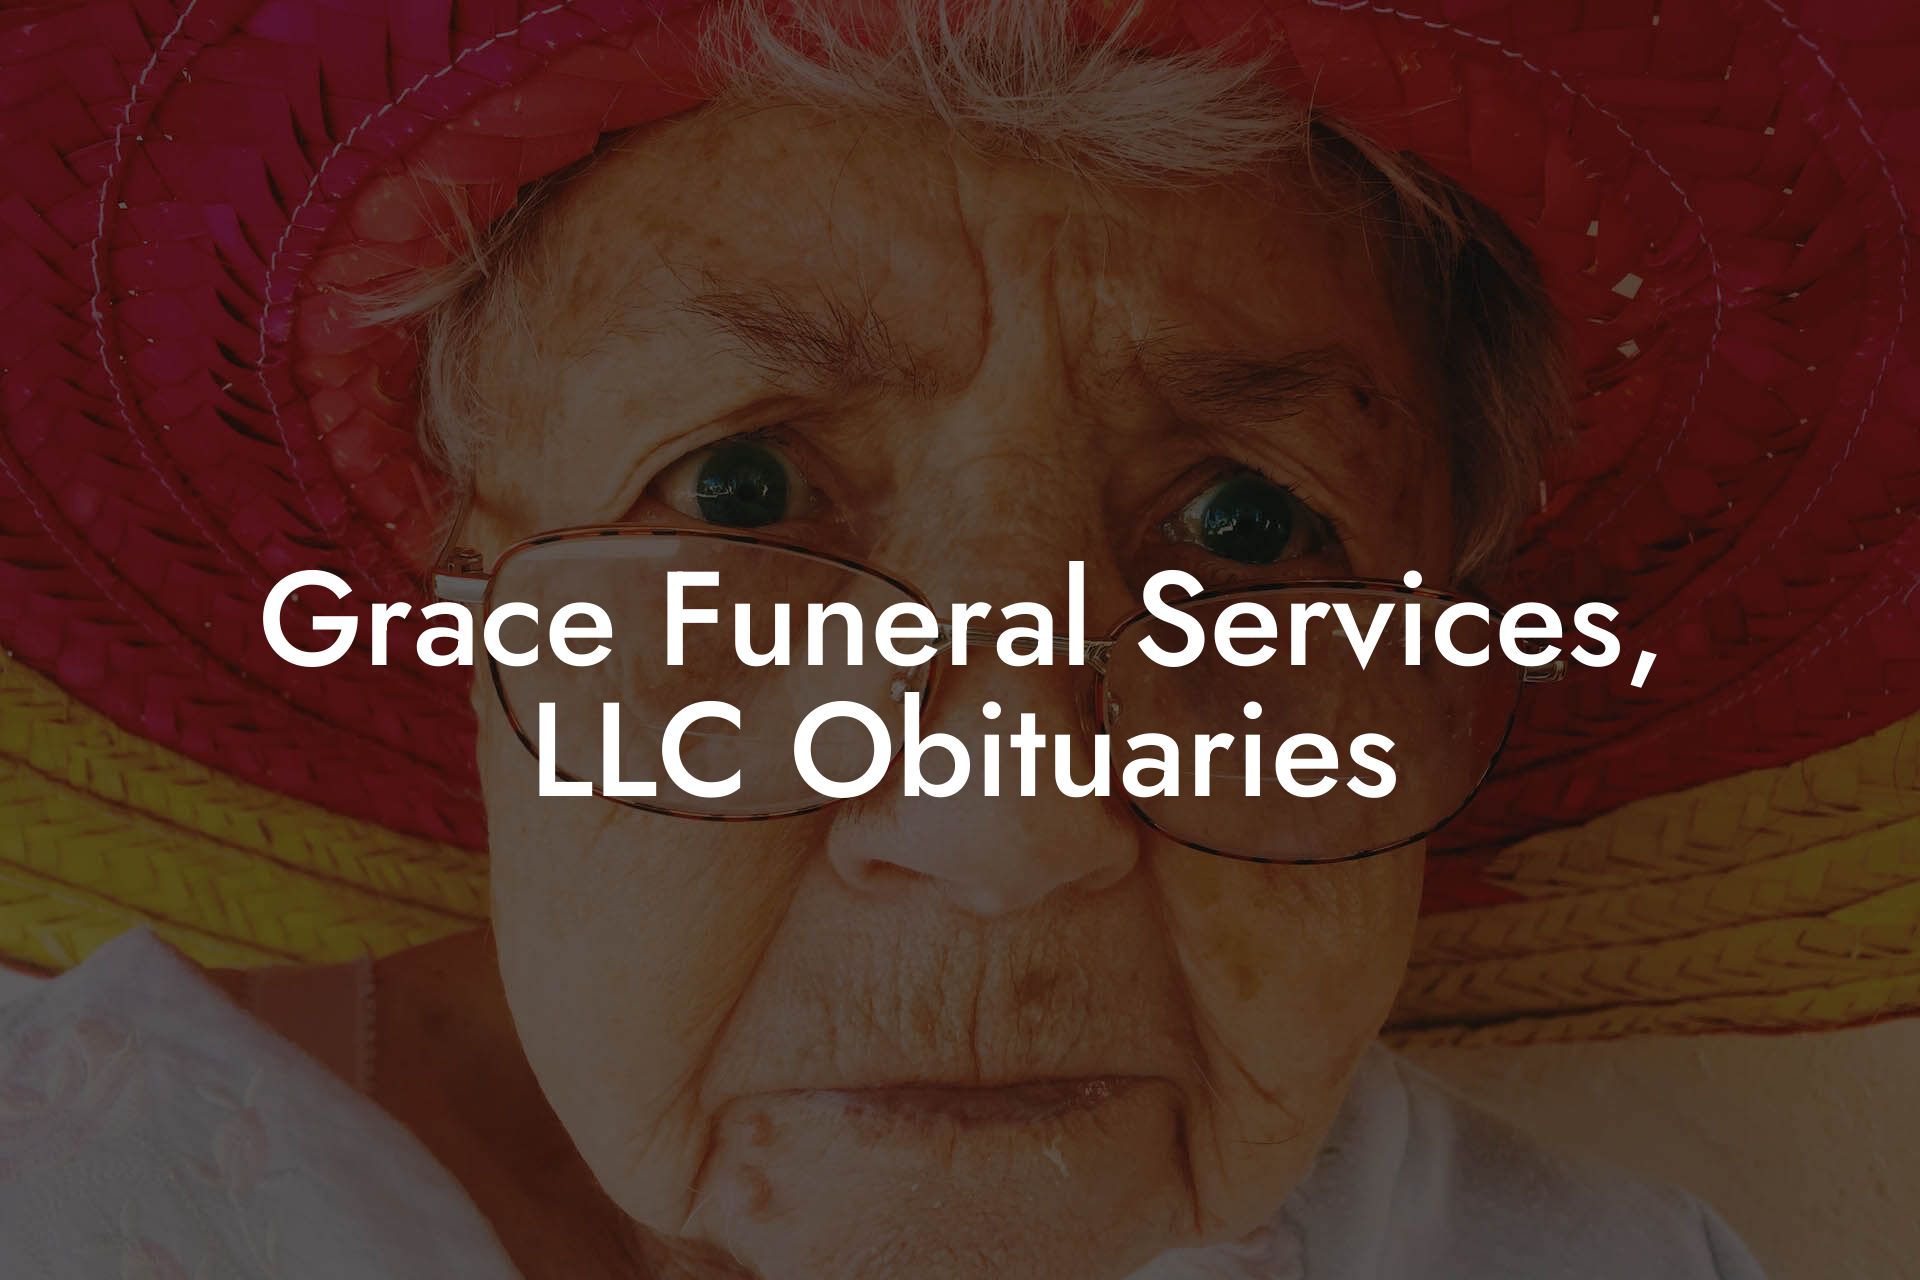 Grace Funeral Services, LLC Obituaries